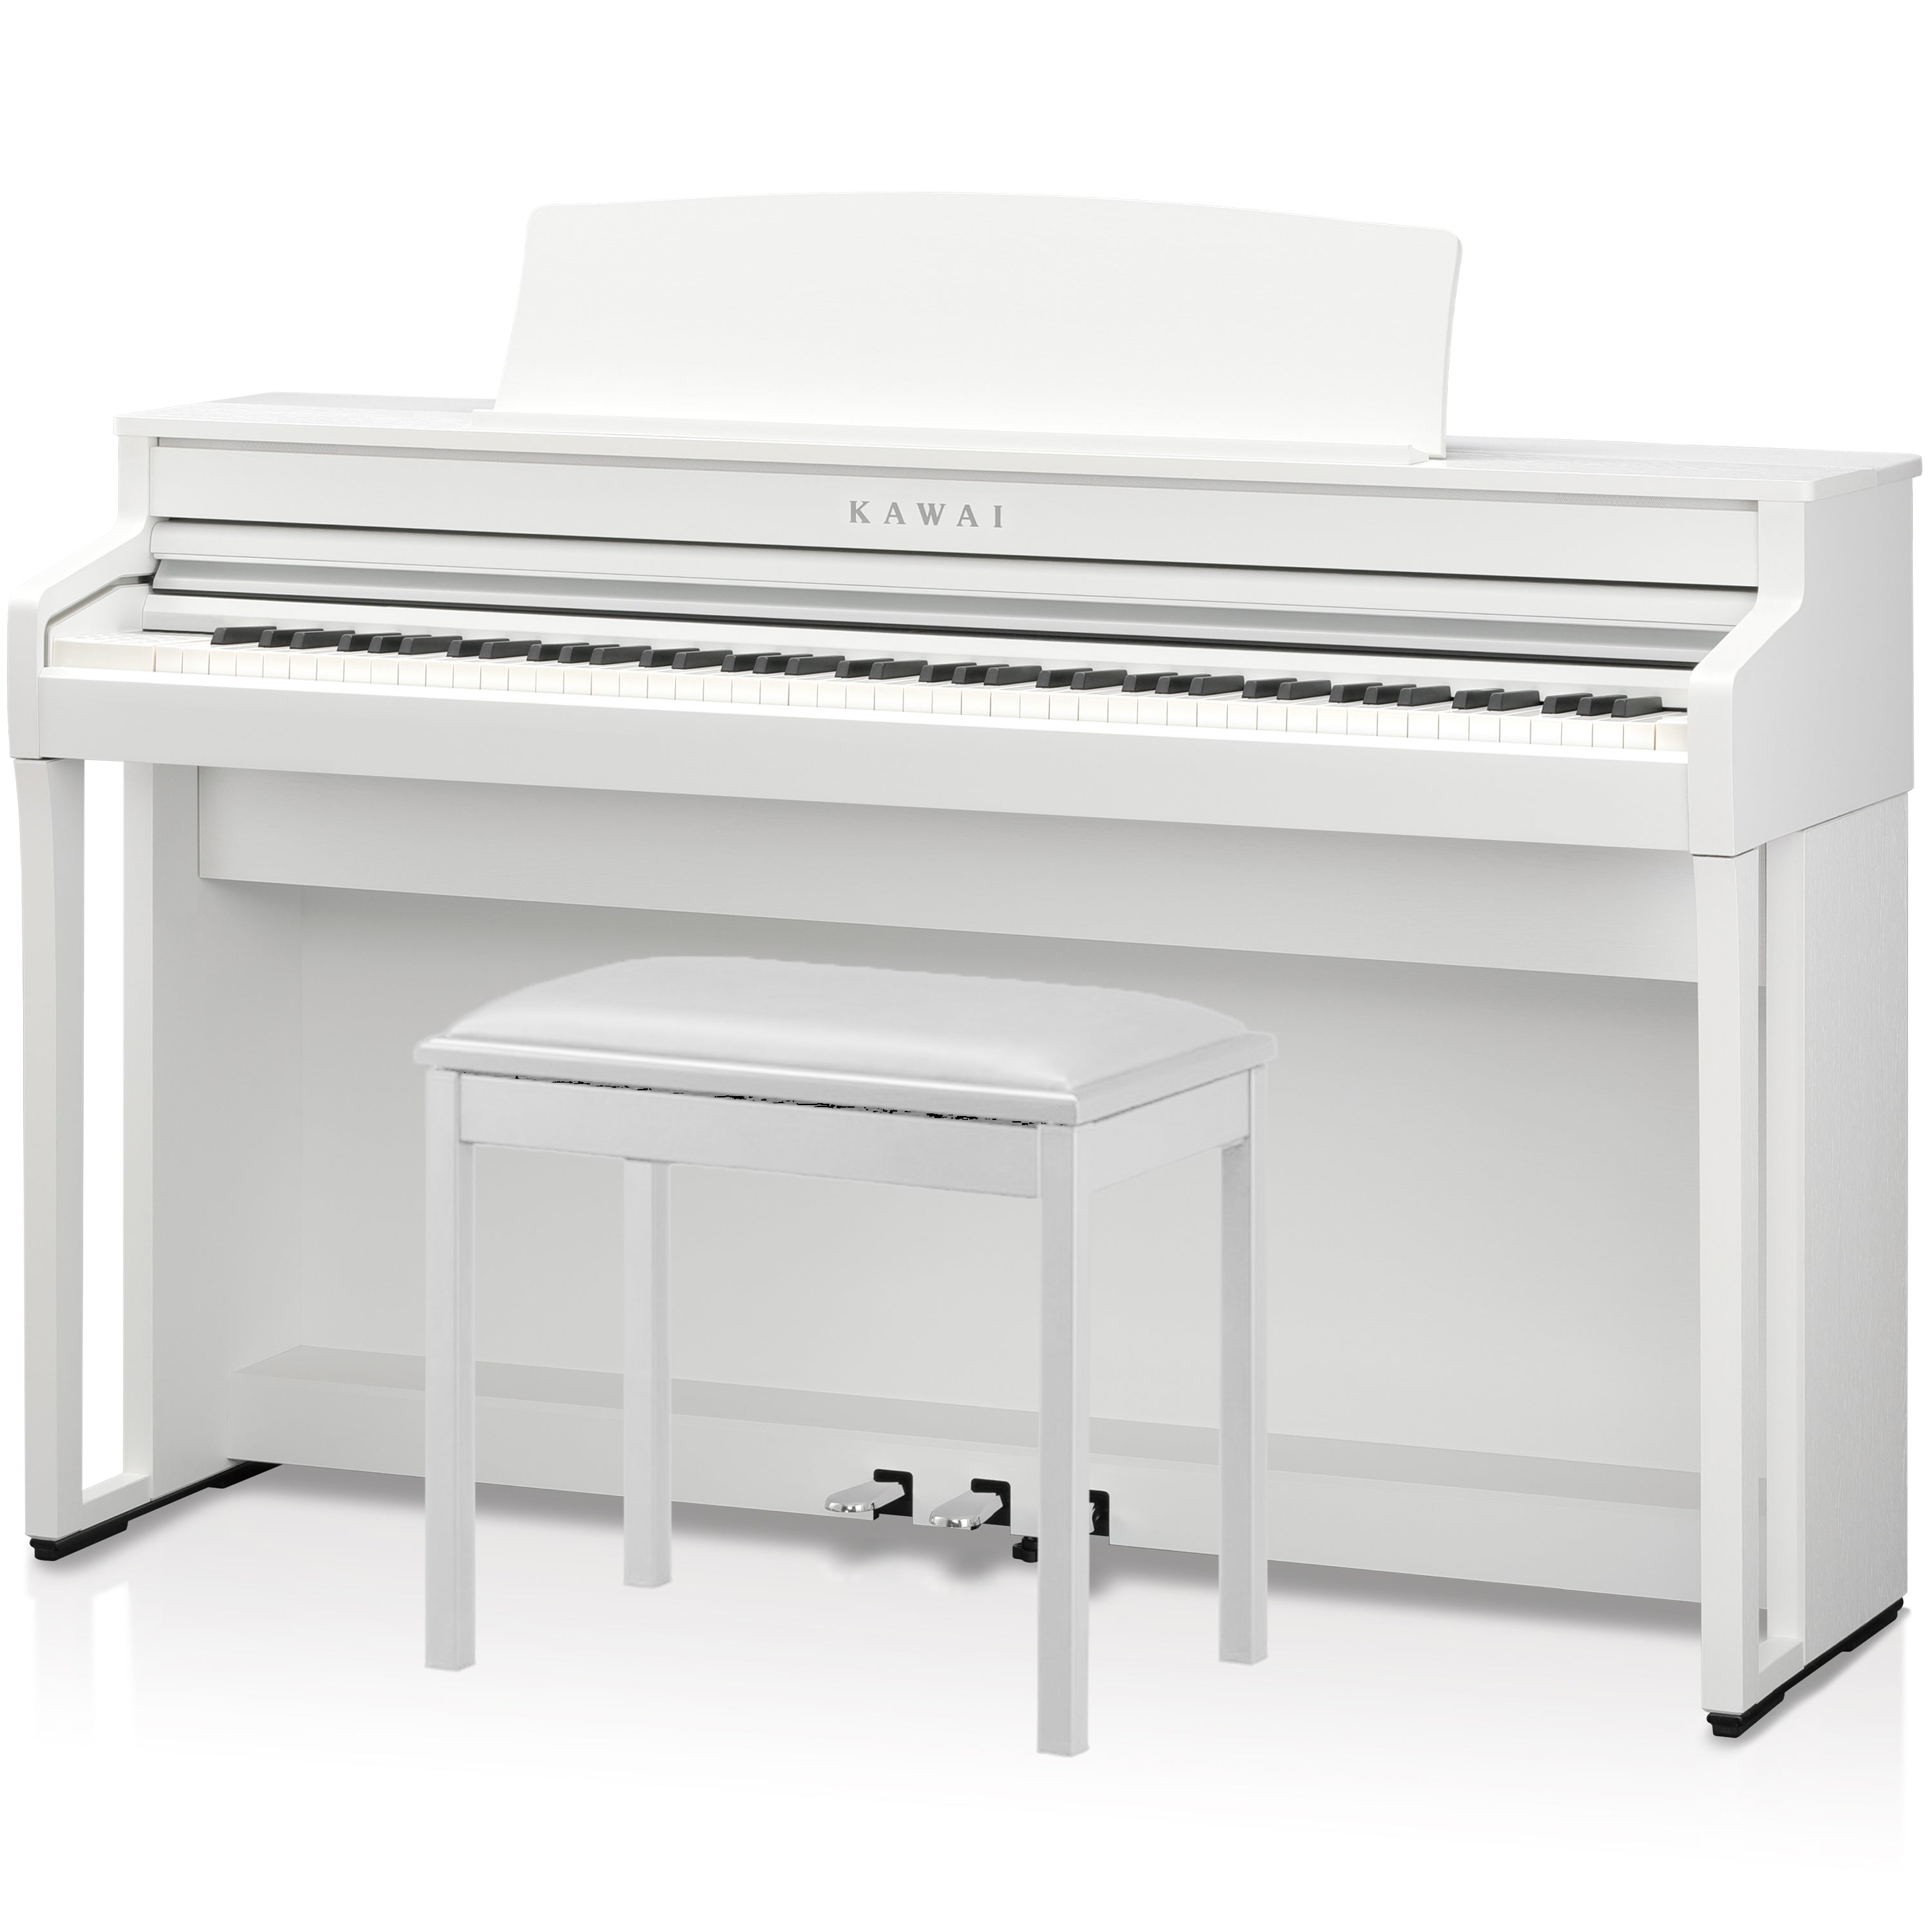 Kawai CA59 Concert Artist Digital Piano - Satin White - with bench